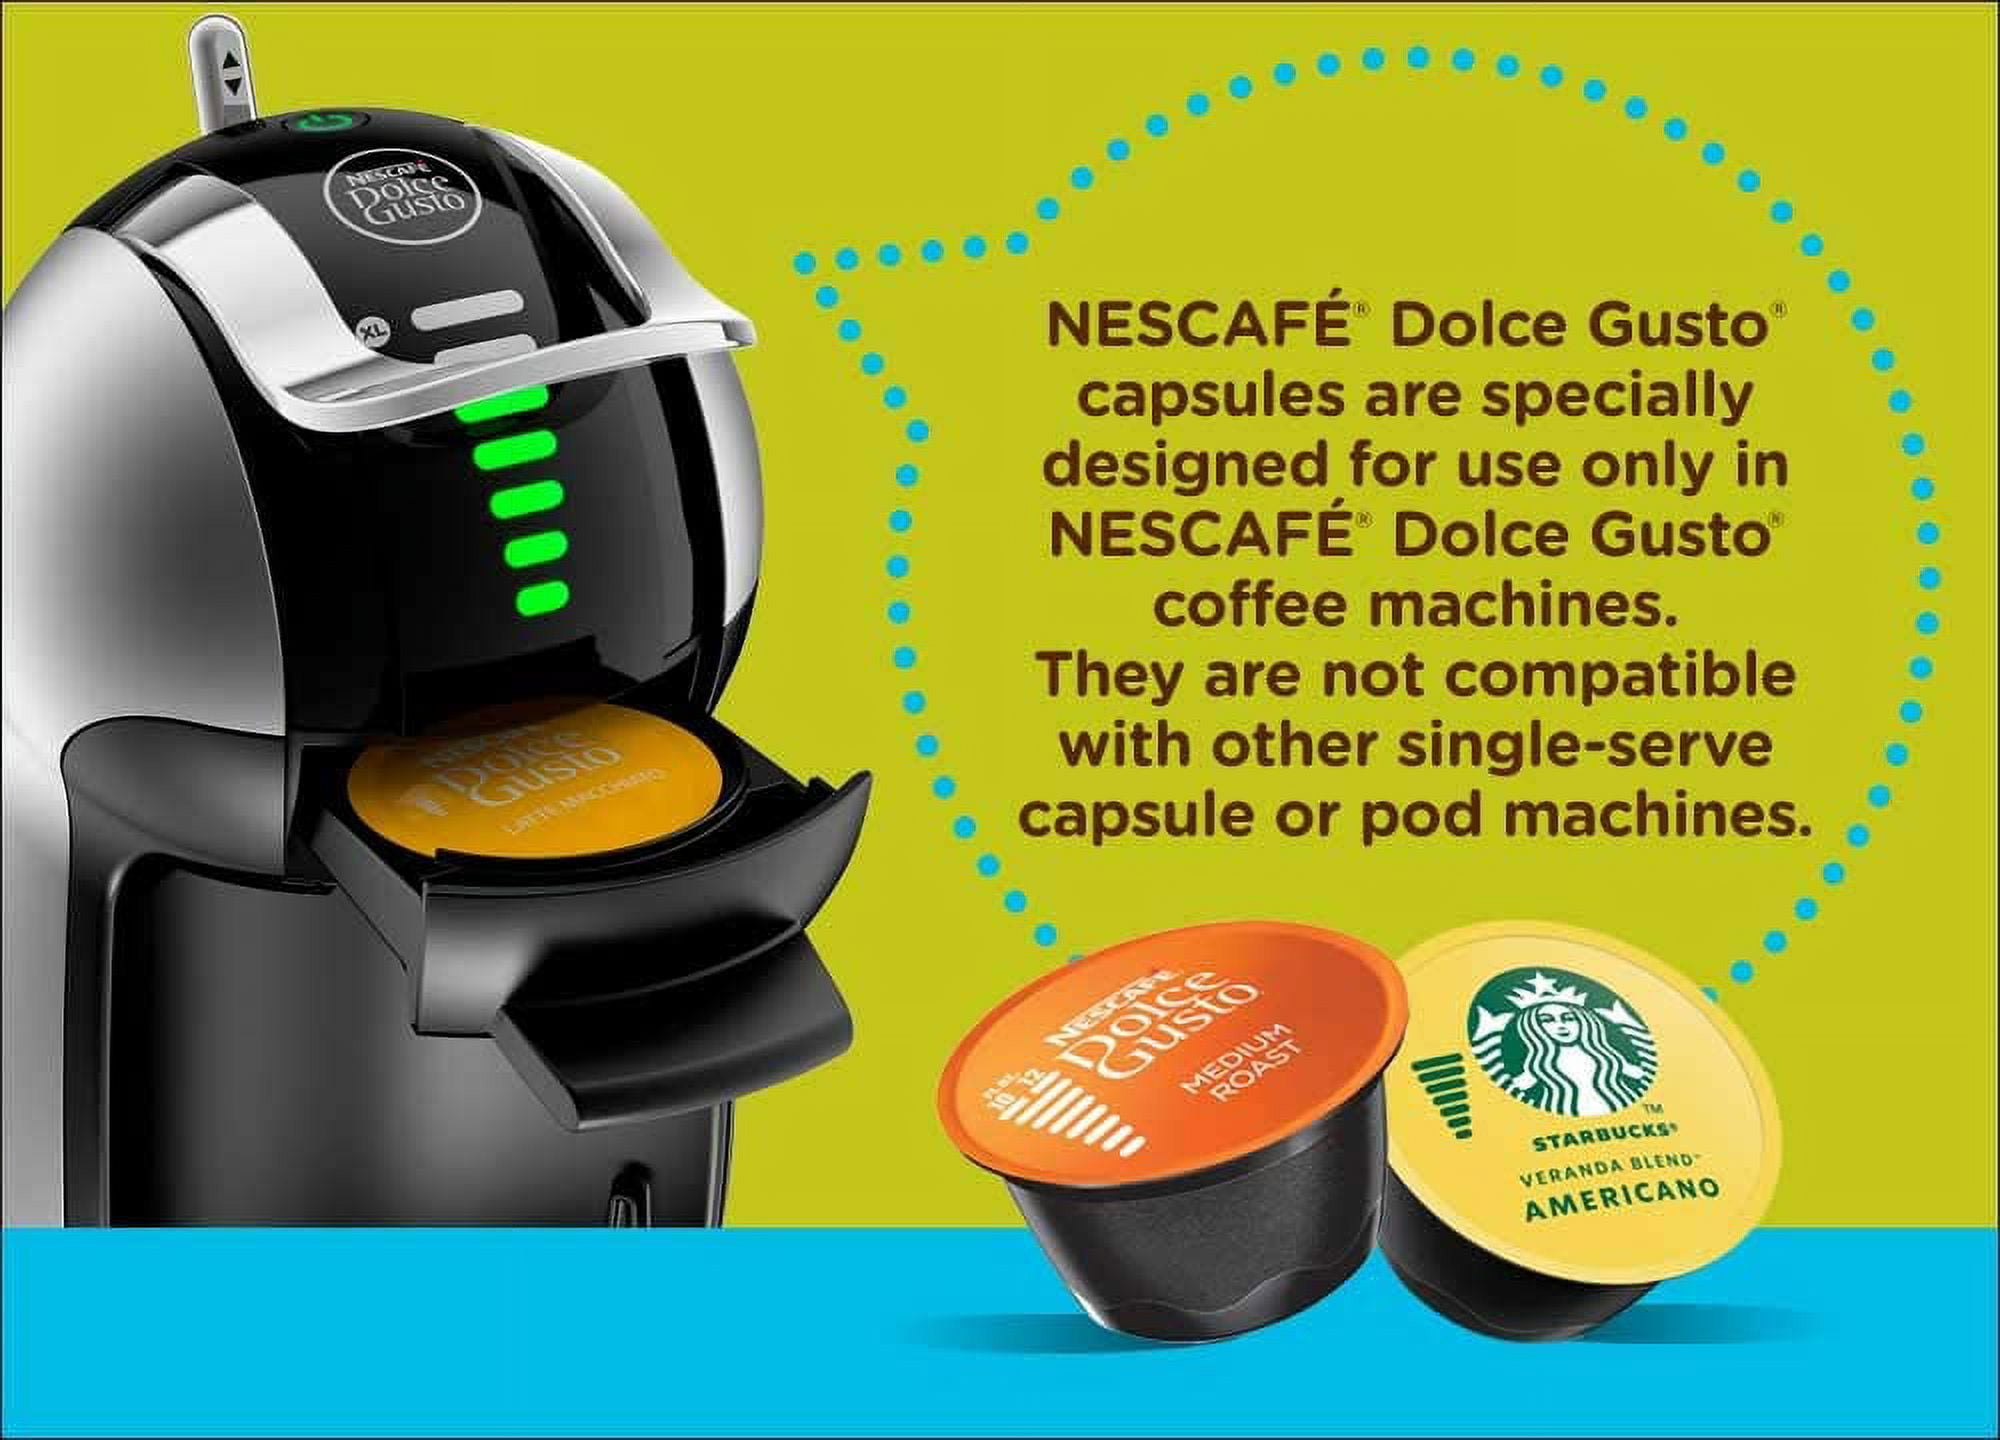 Nescafe Dolce Gusto Genio 2 Coffee Machine - NES65198 